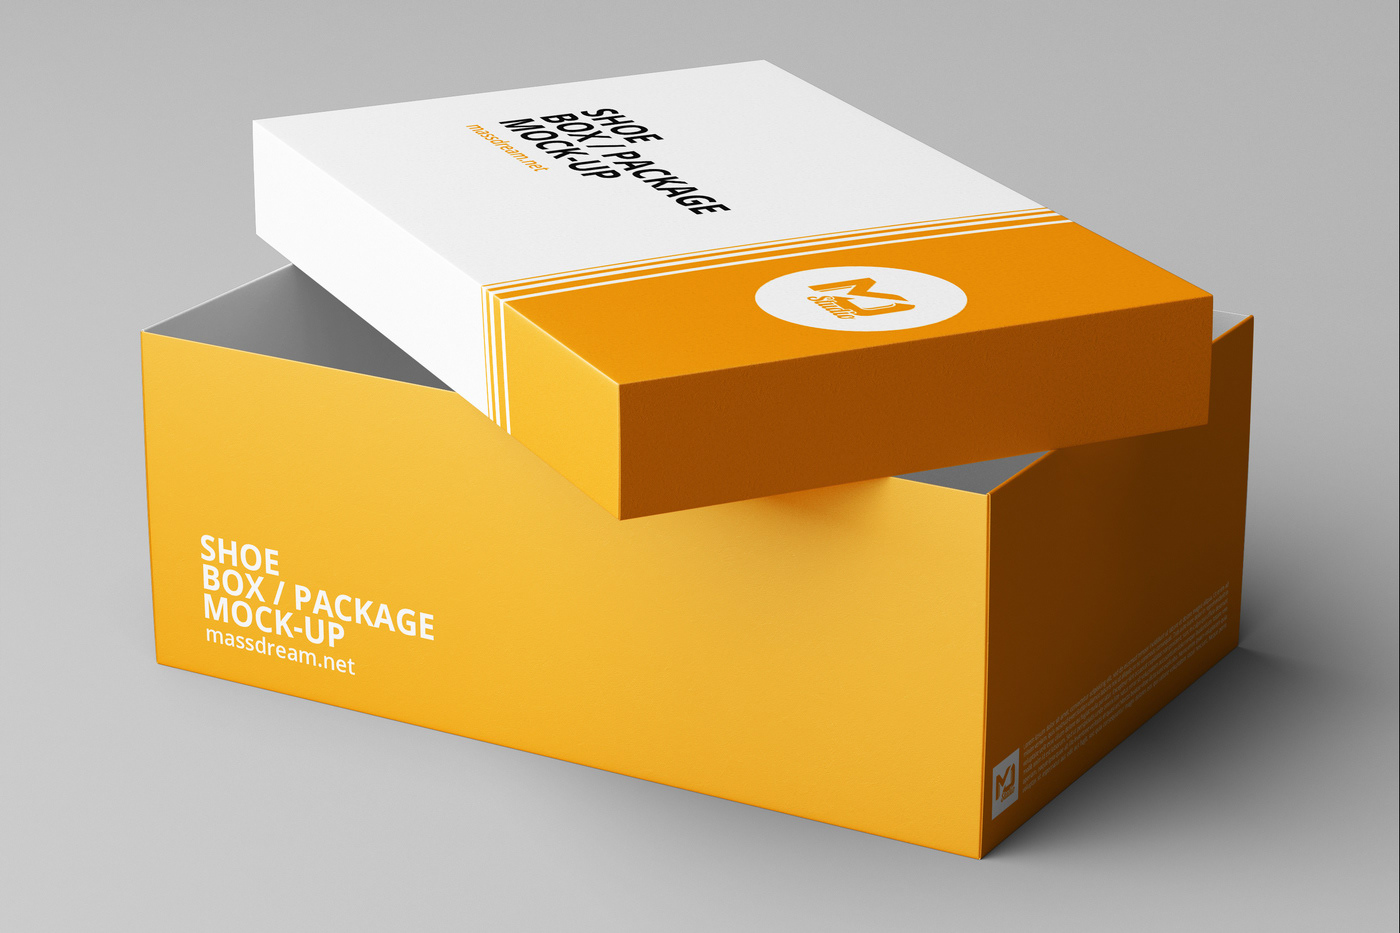 Box. Коробка для обуви мокап. Shoe Box Design. Packing Boxes Design. Box package Design.